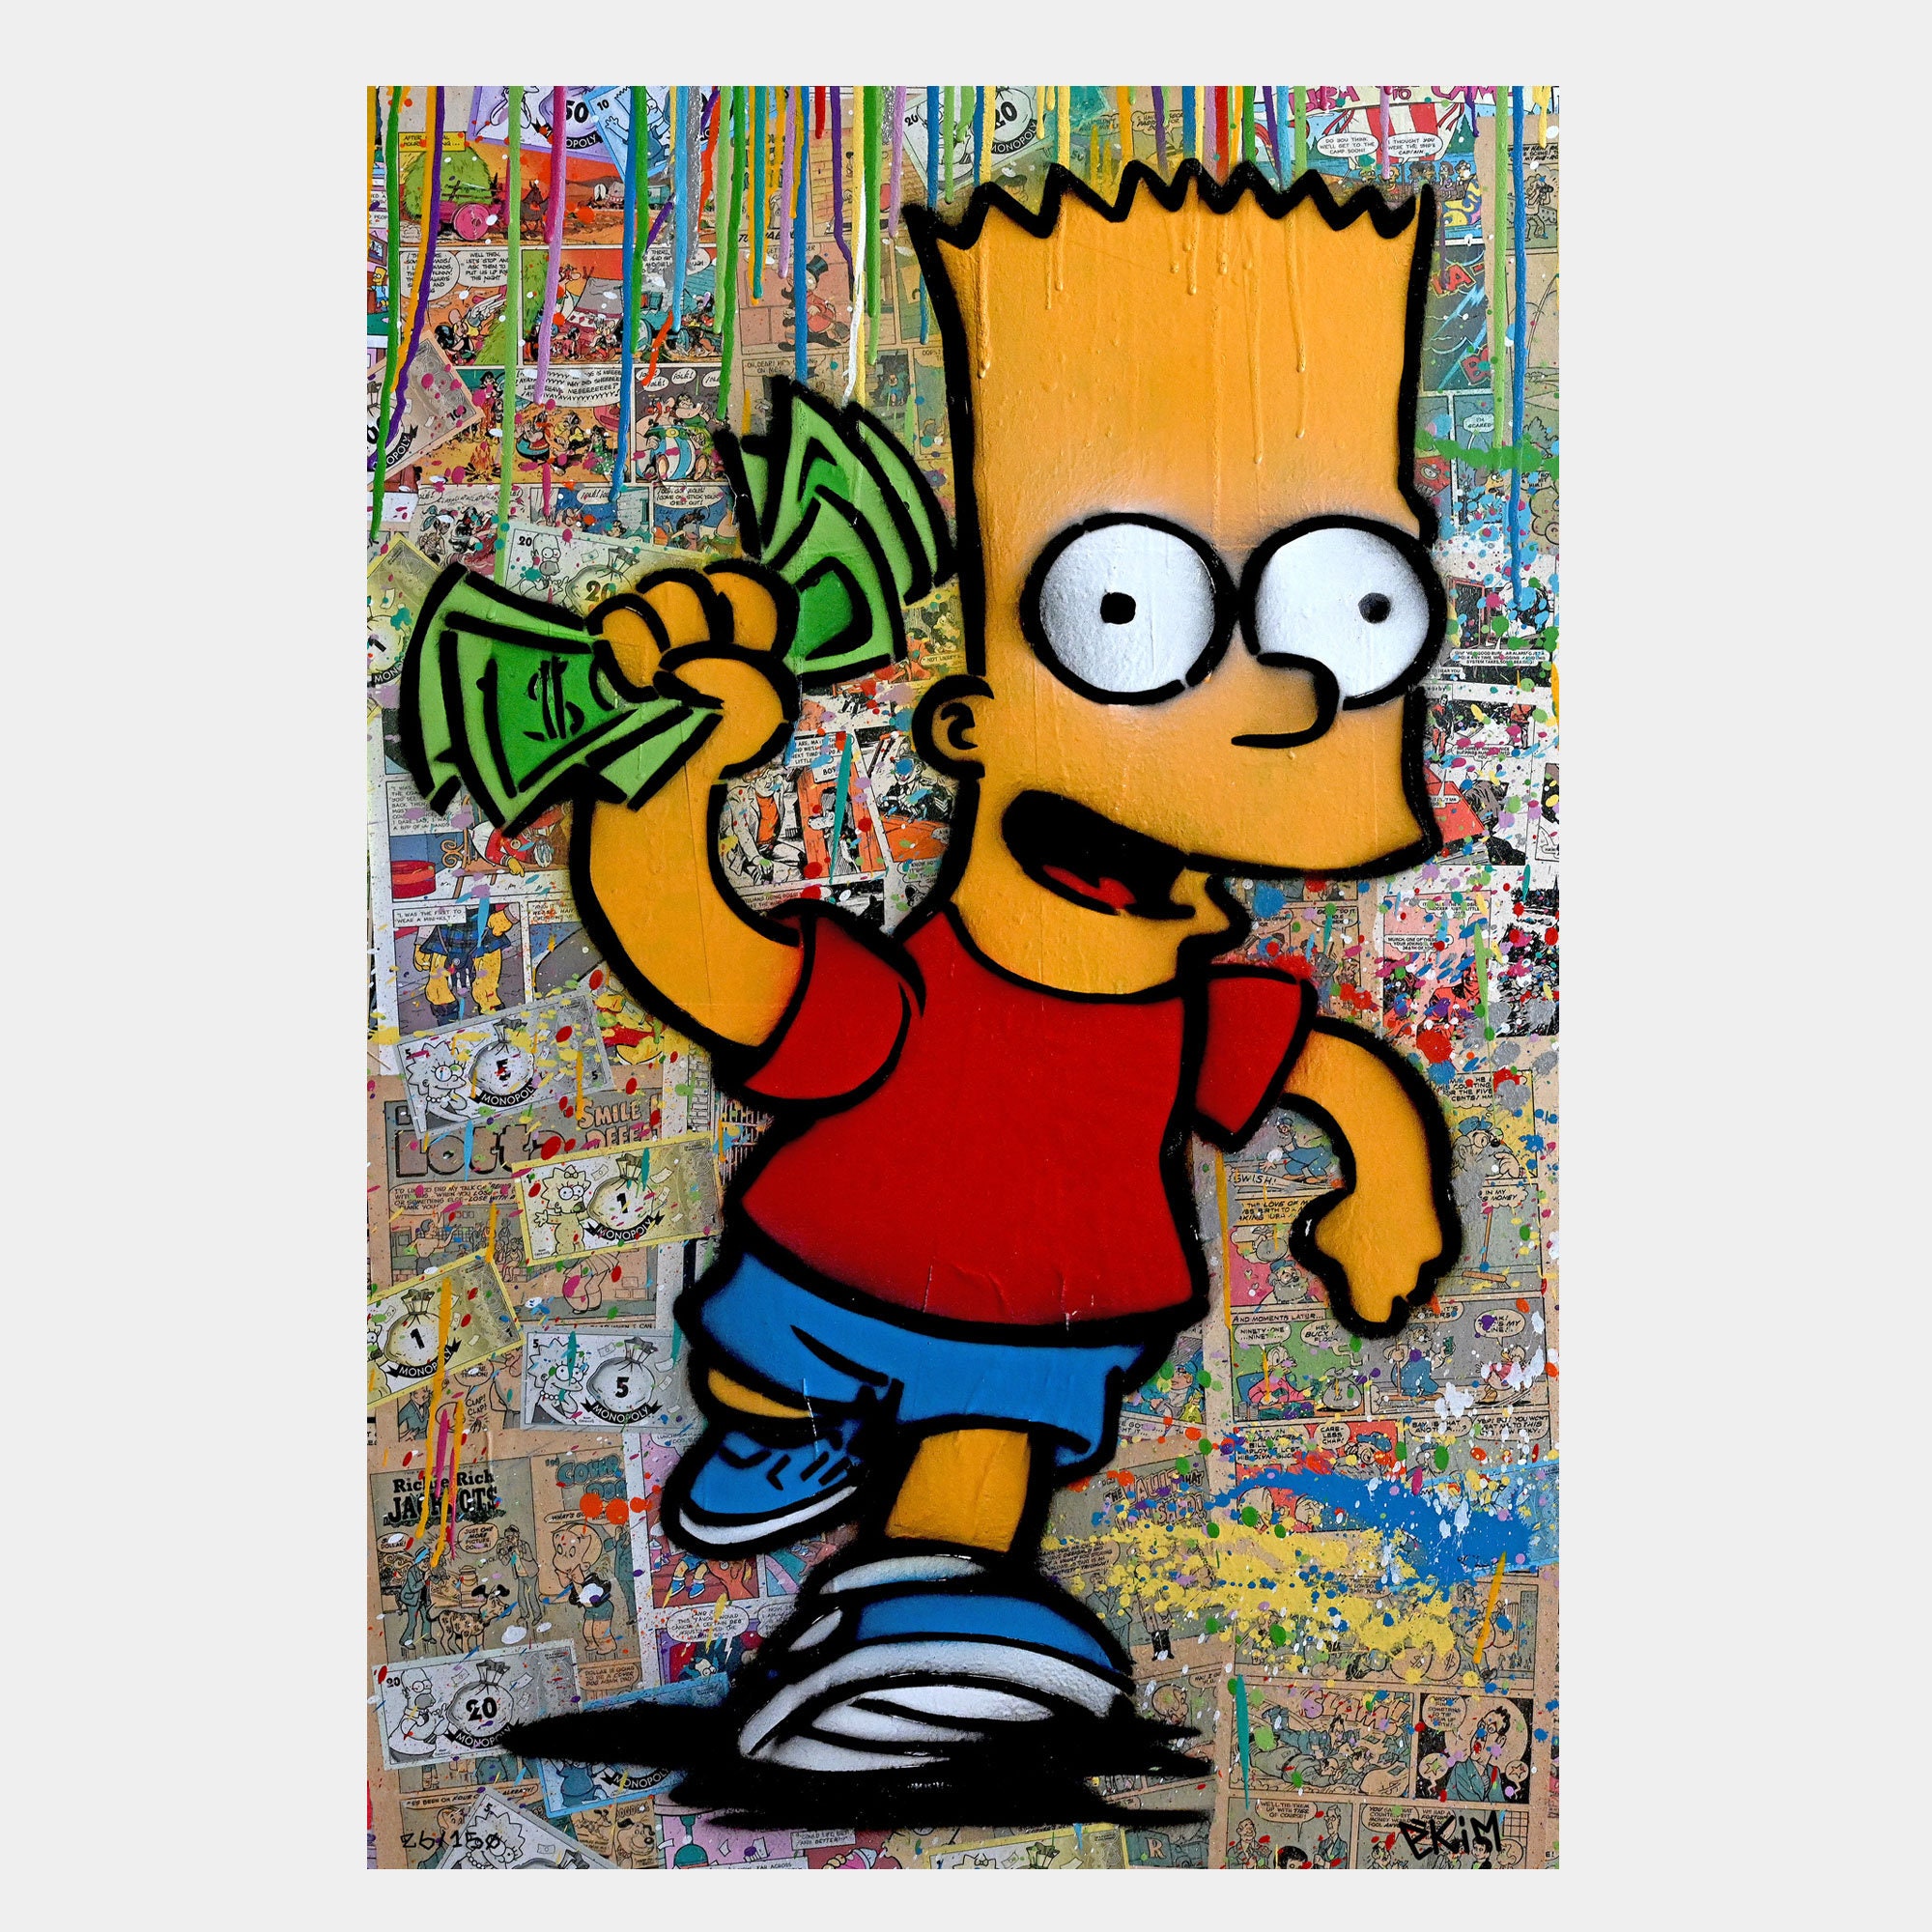 Bart simpsons art